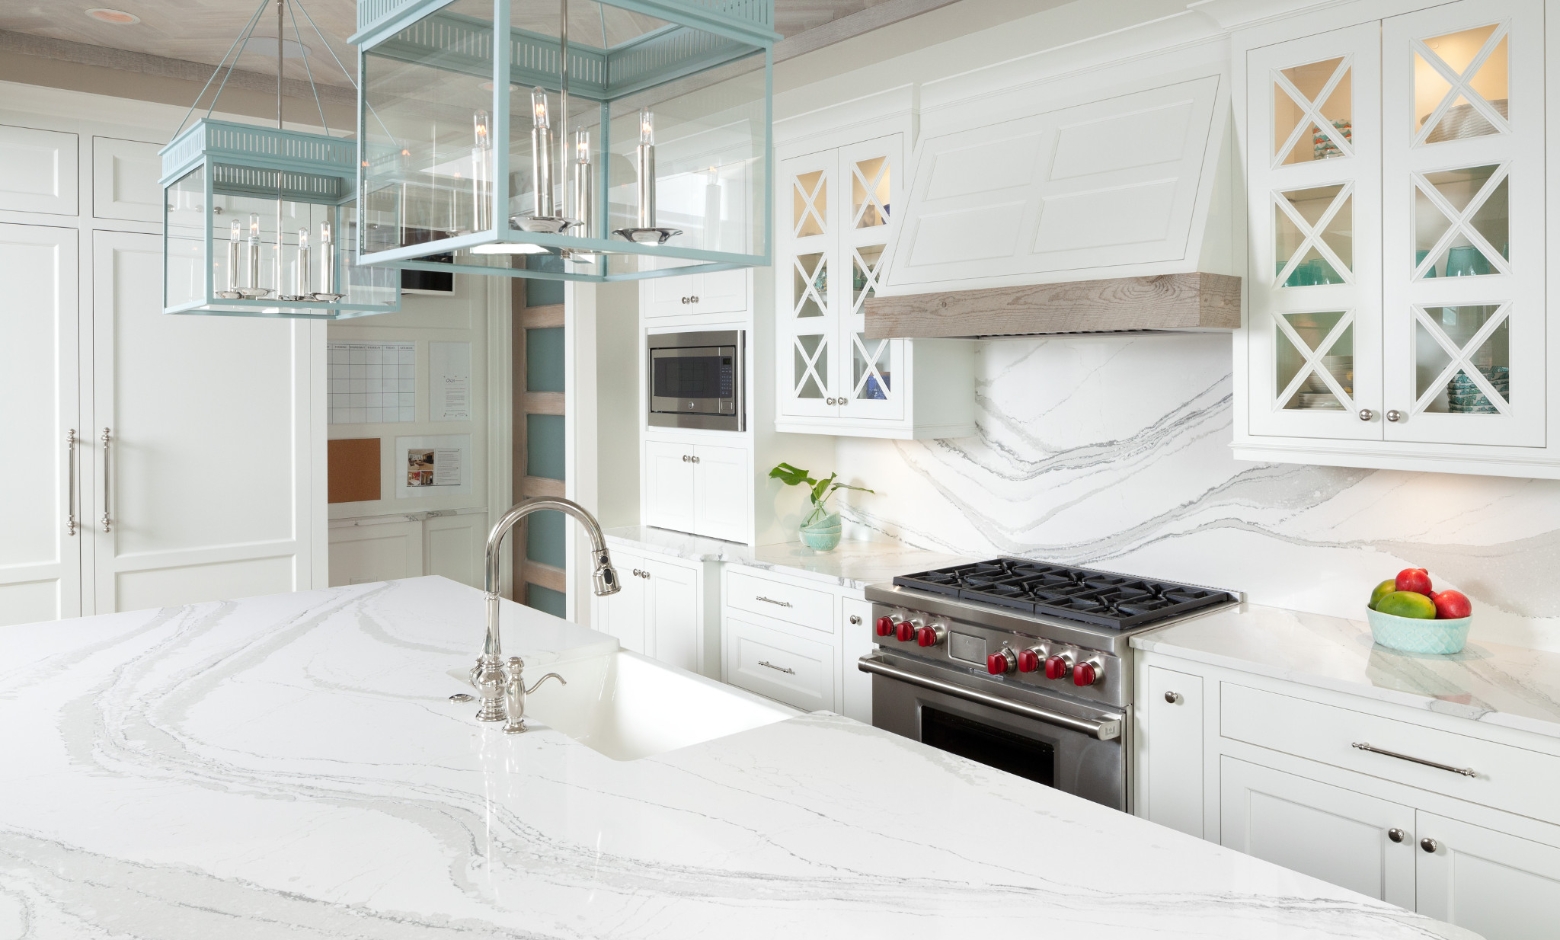 Cambria Brittanicca Kitchen and Backsplash Countertops with White Cabinets